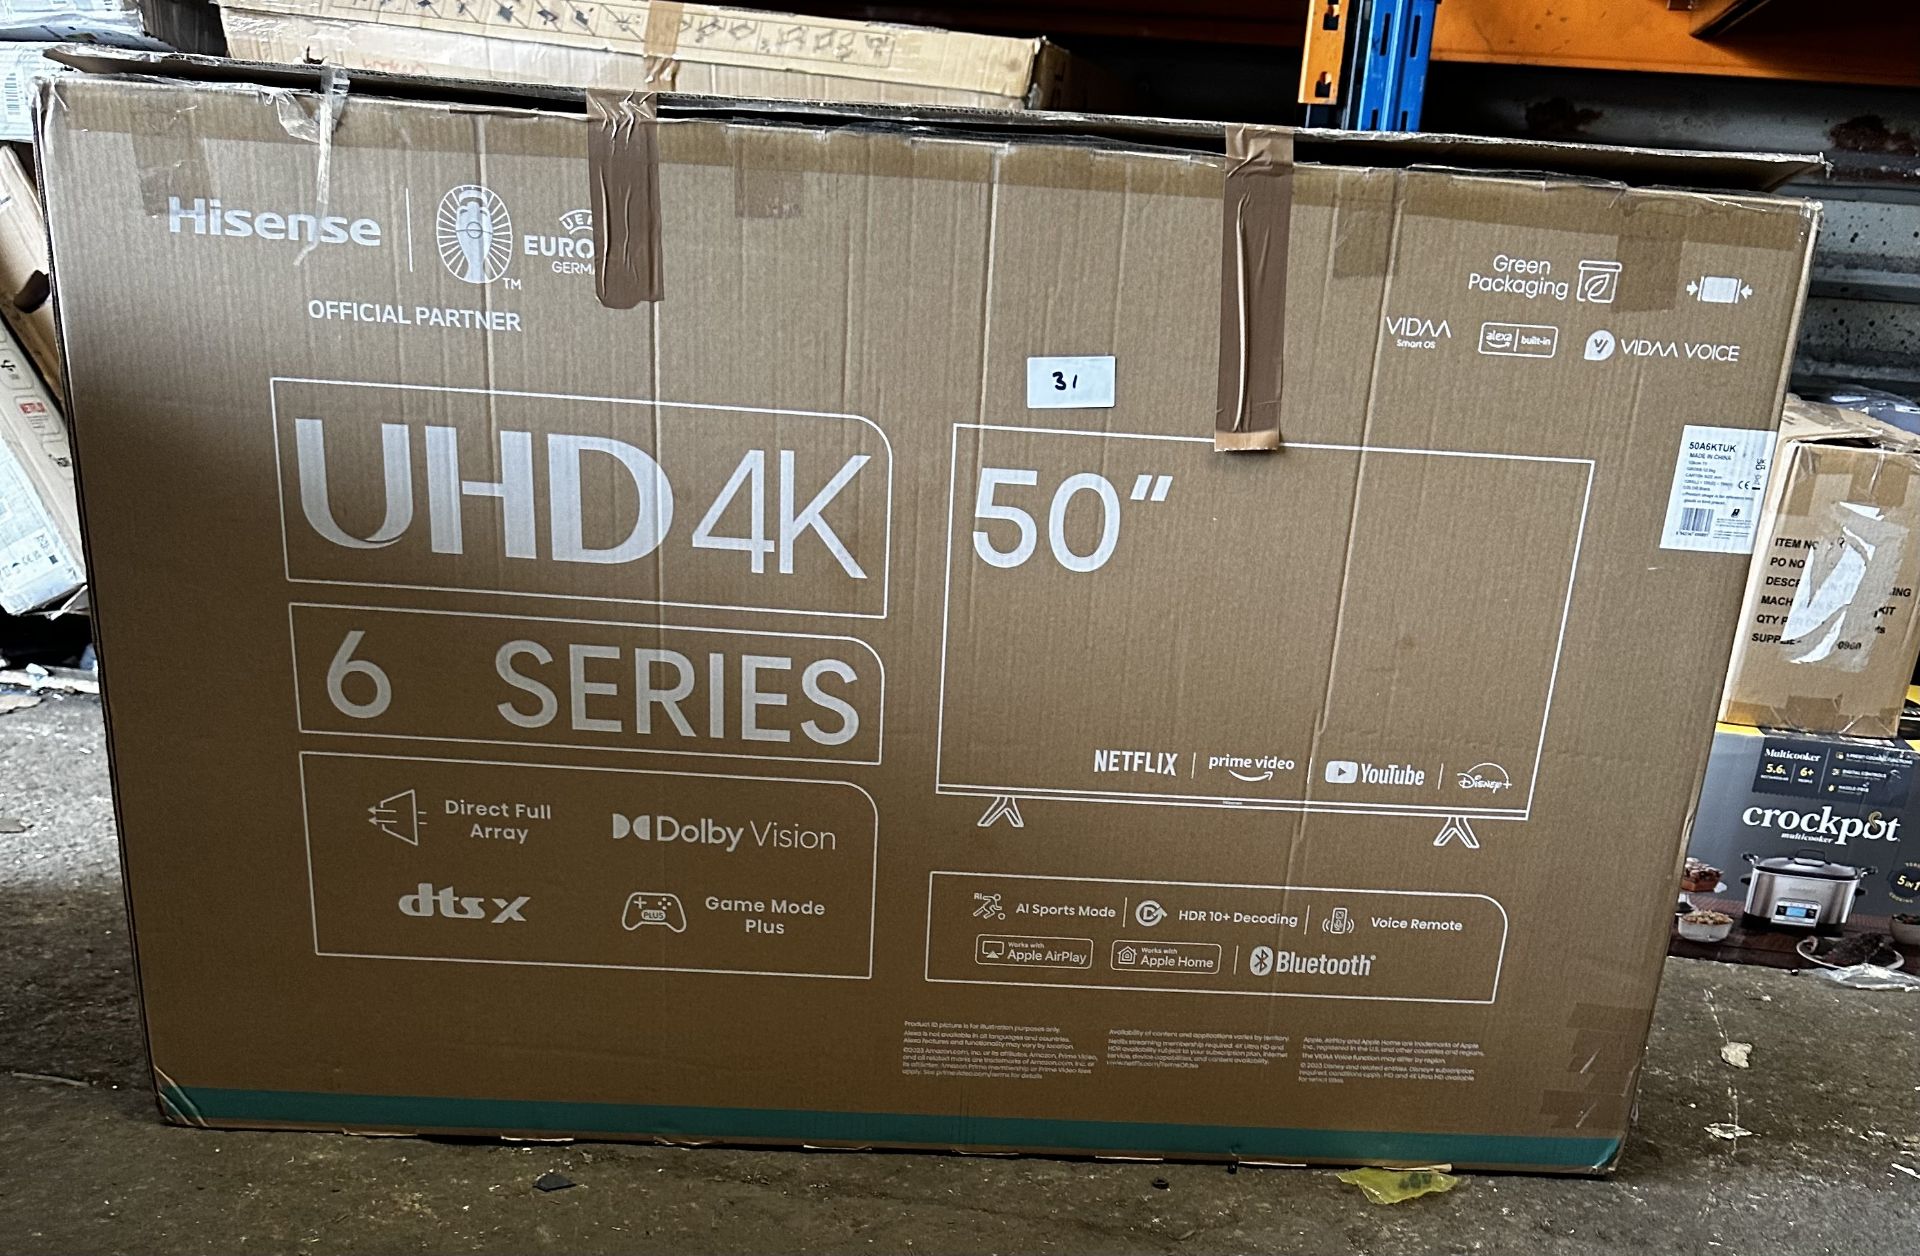 Hisense UHD 4K 6 Series 50"" Smart TV. RRP £320 - GRADE U